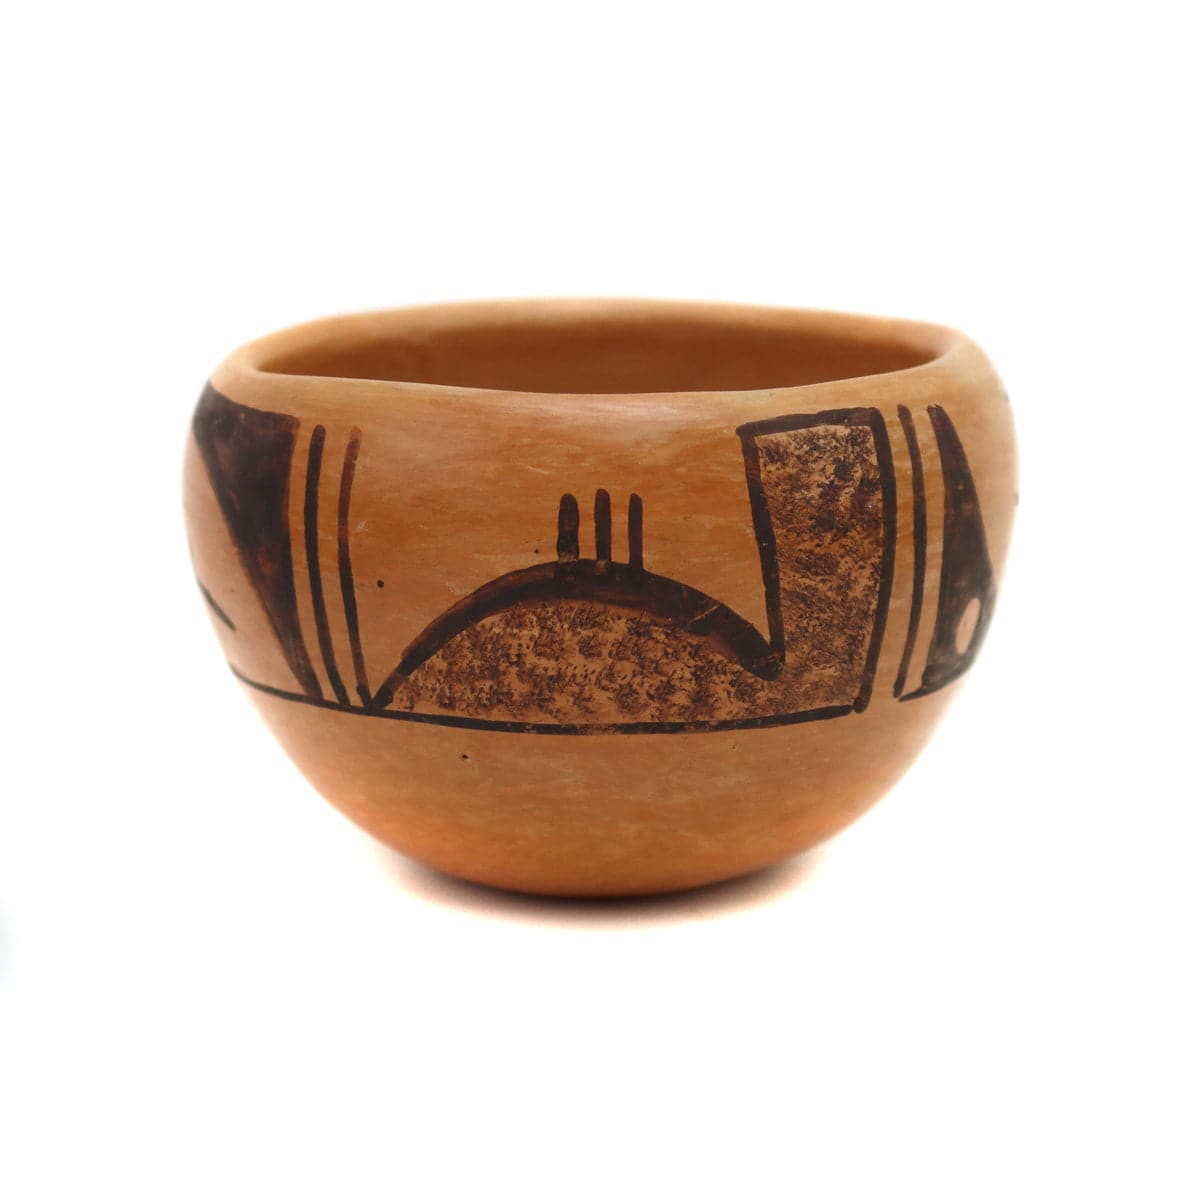 Hopi Bowl c. 1970s, 2.75" x 4.25" (P3329)
